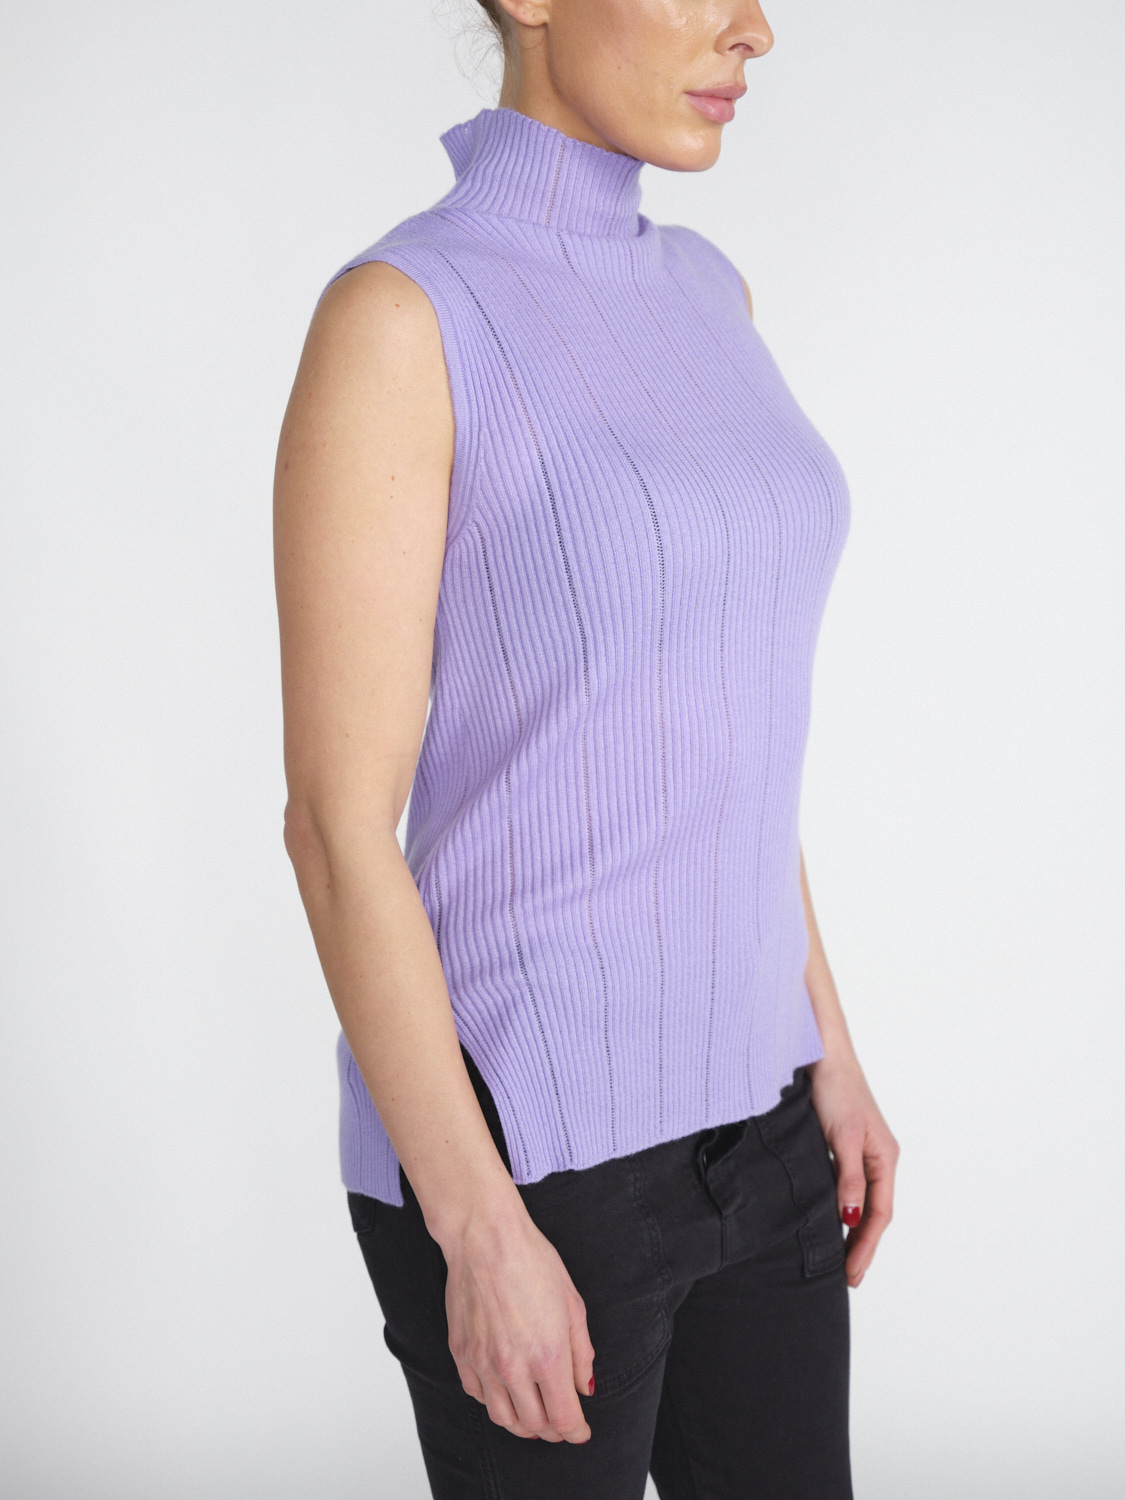 Iris von Arnim Loulou - Knitted top in cashmere-silk blend  lila M